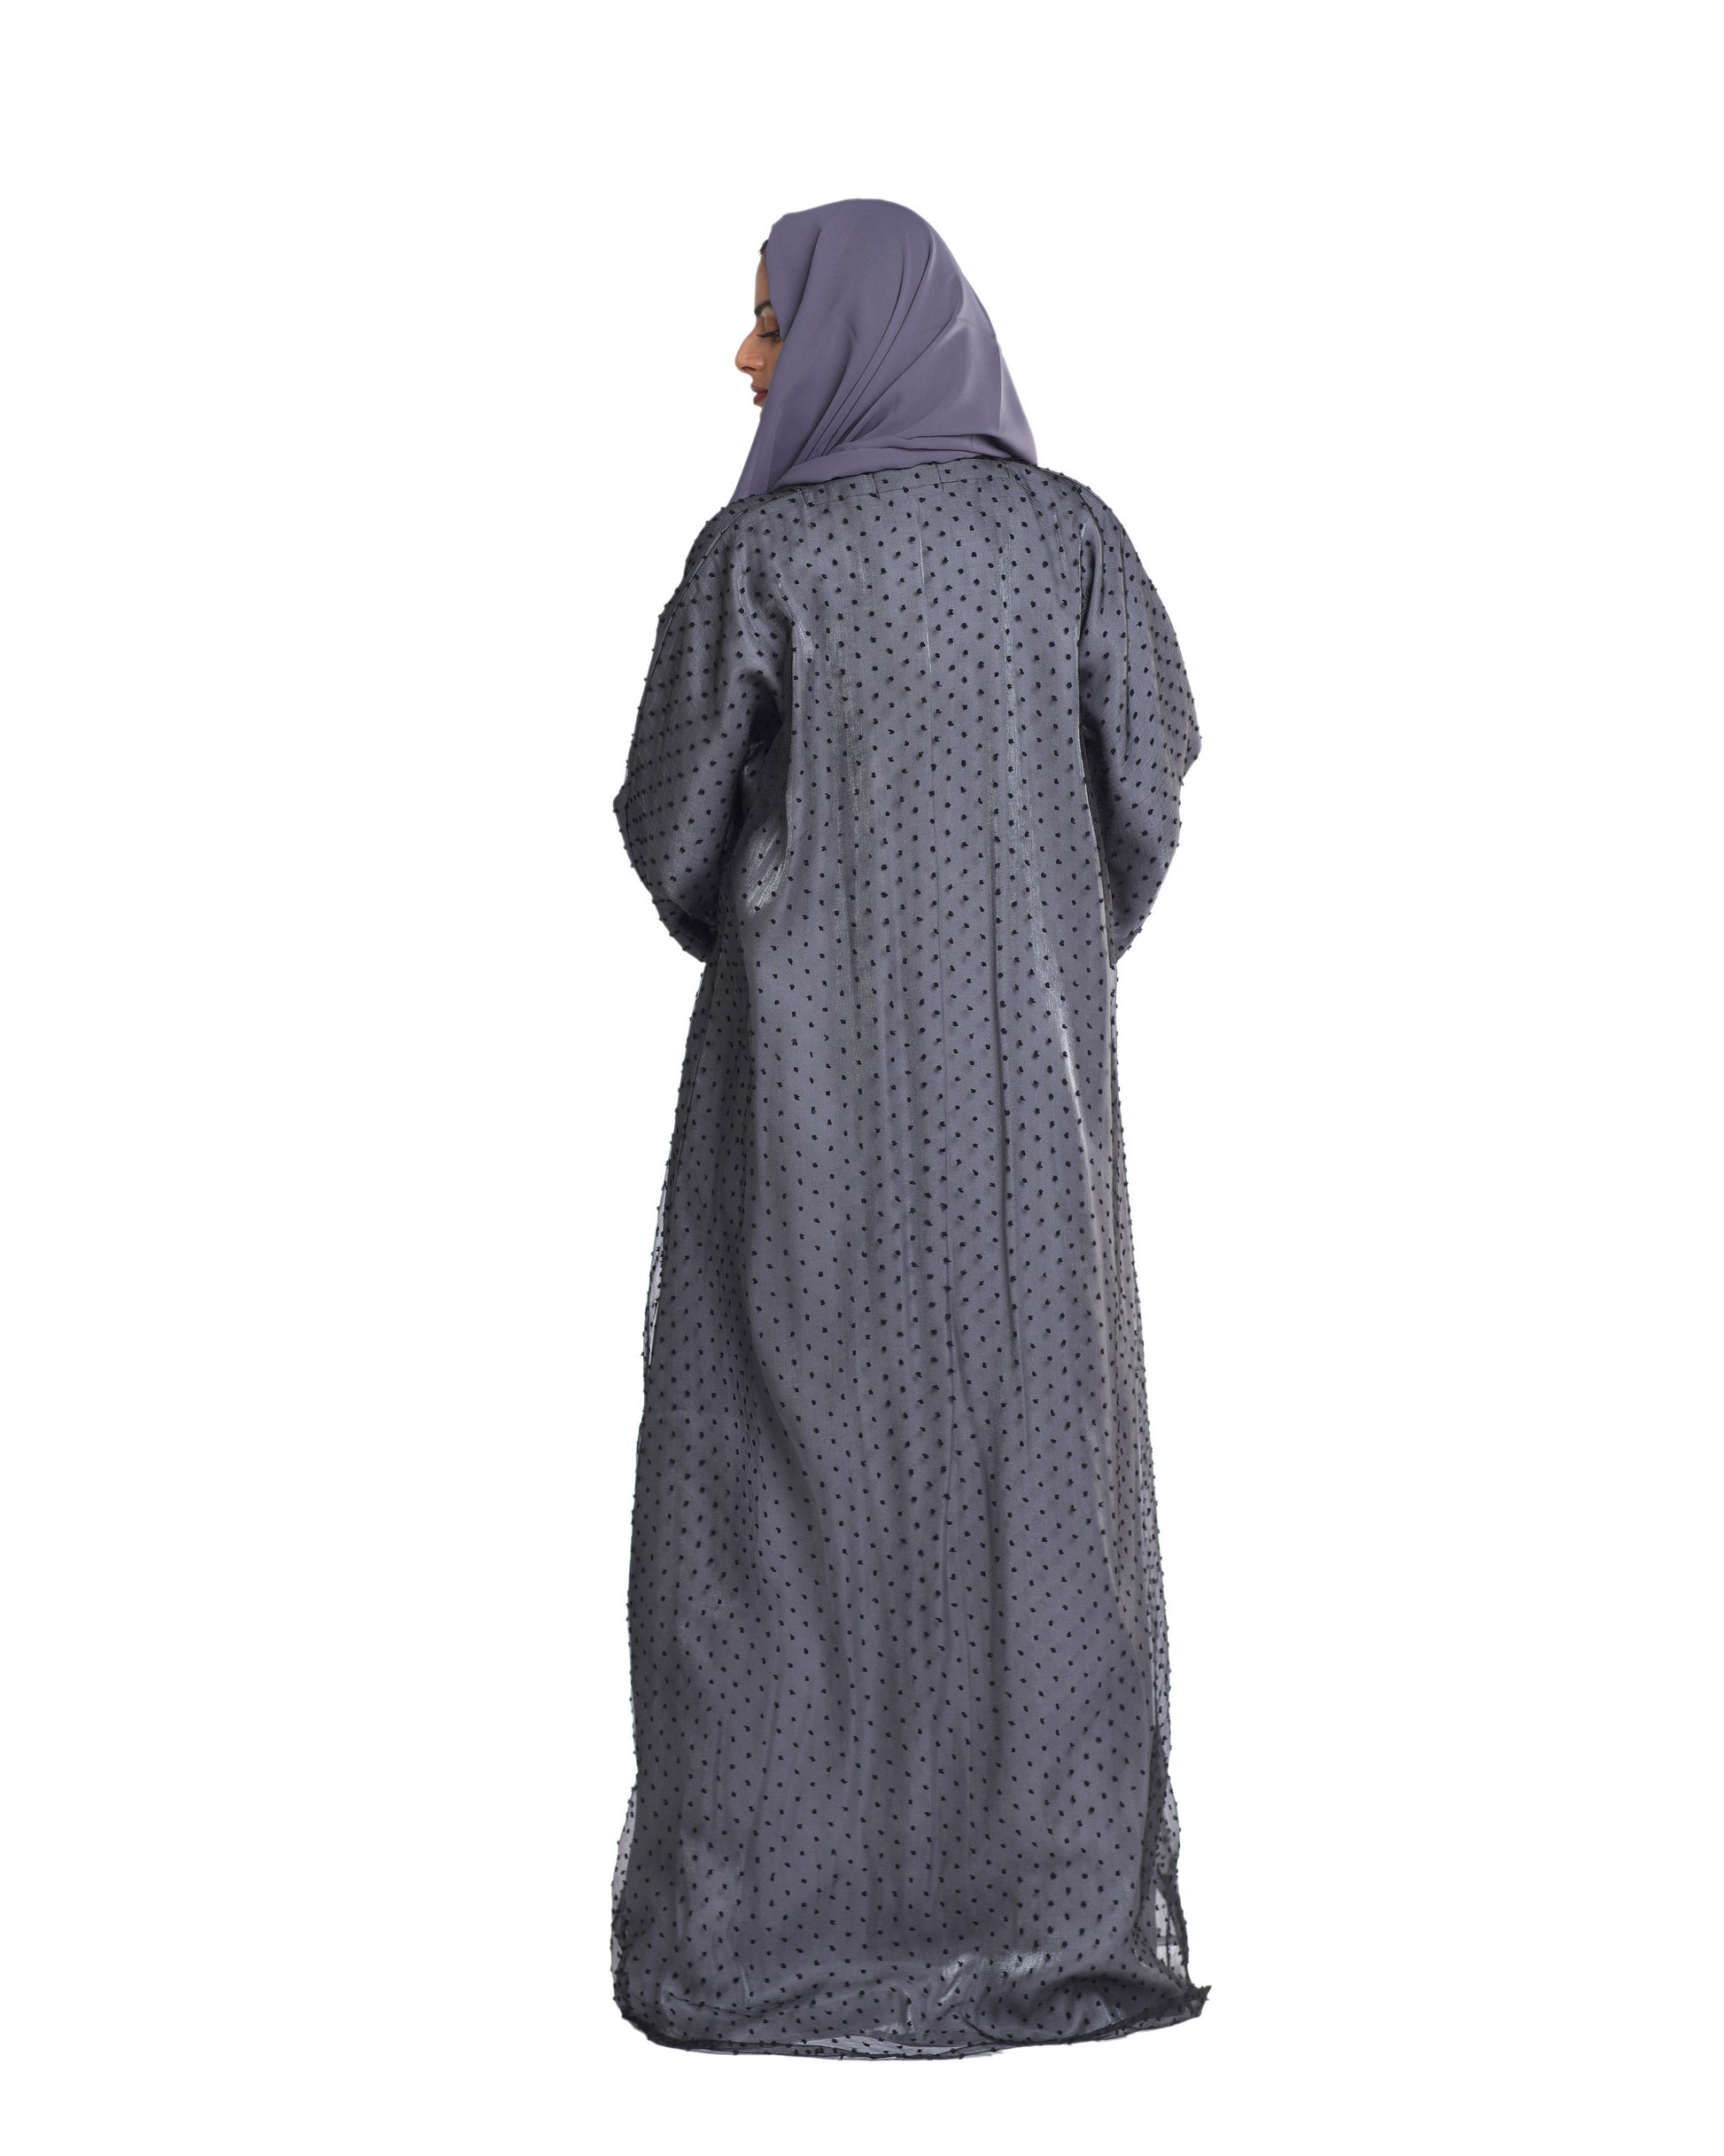 Dusk Dazzle Abaya - Fashion by Shehna